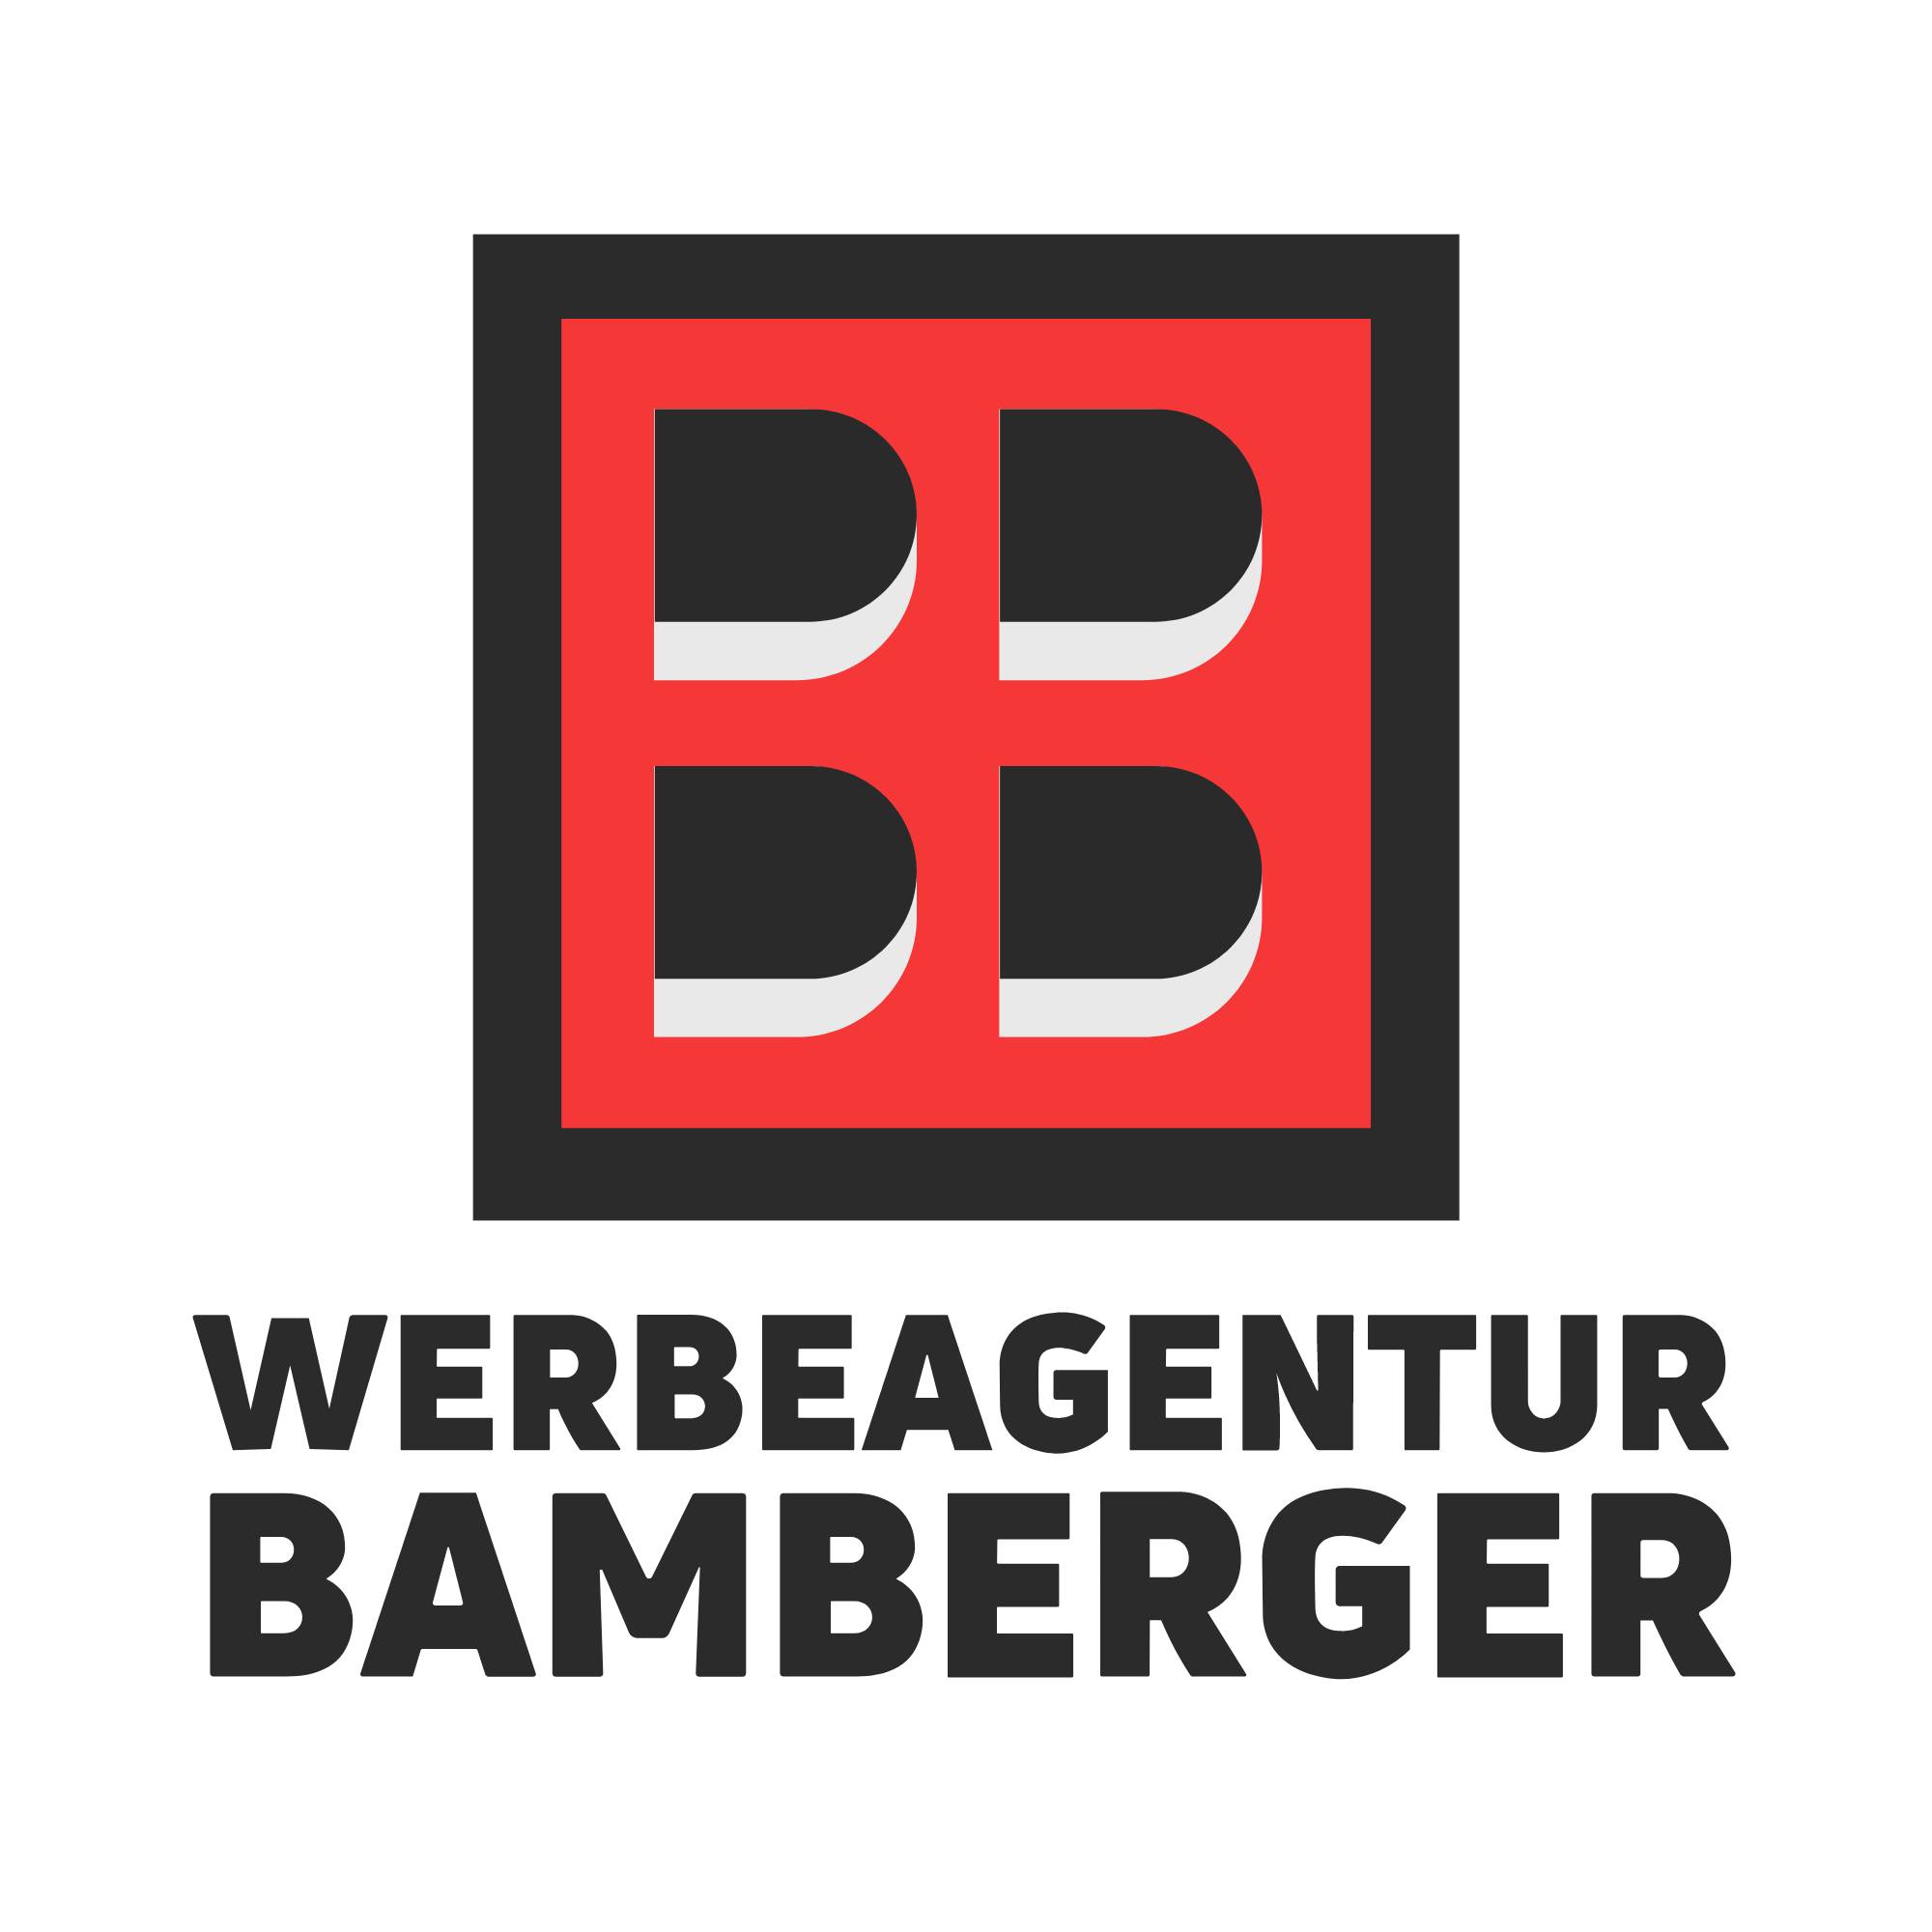 Werbeagentur Bamberger in Braunschweig - Logo